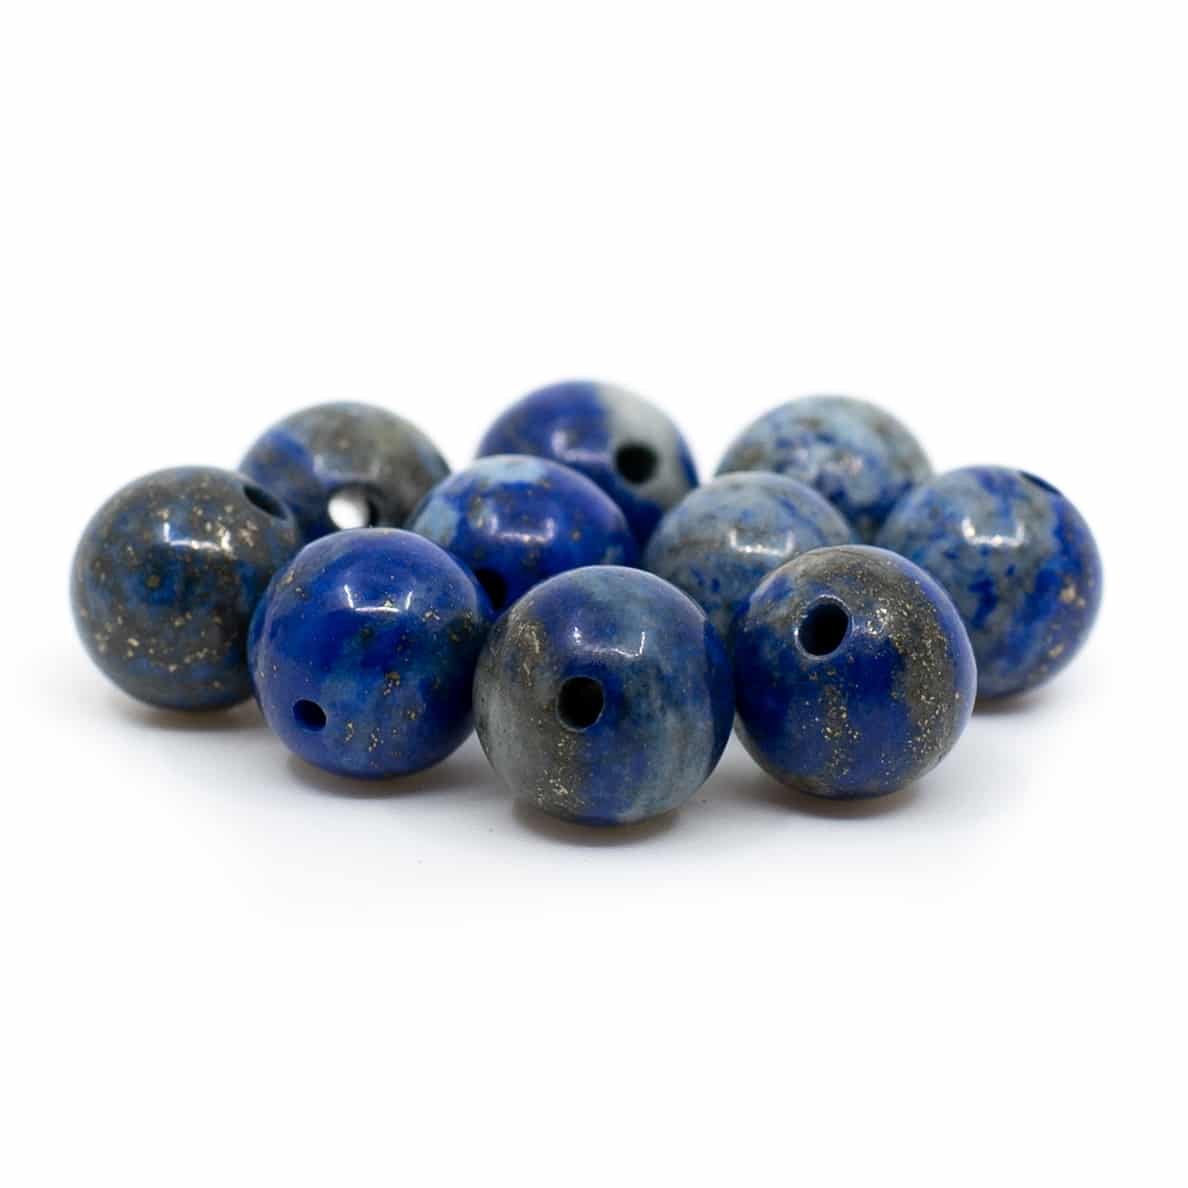 Gemstone Loose Beads Lapis Lazuli - 10 pieces (8 mm)